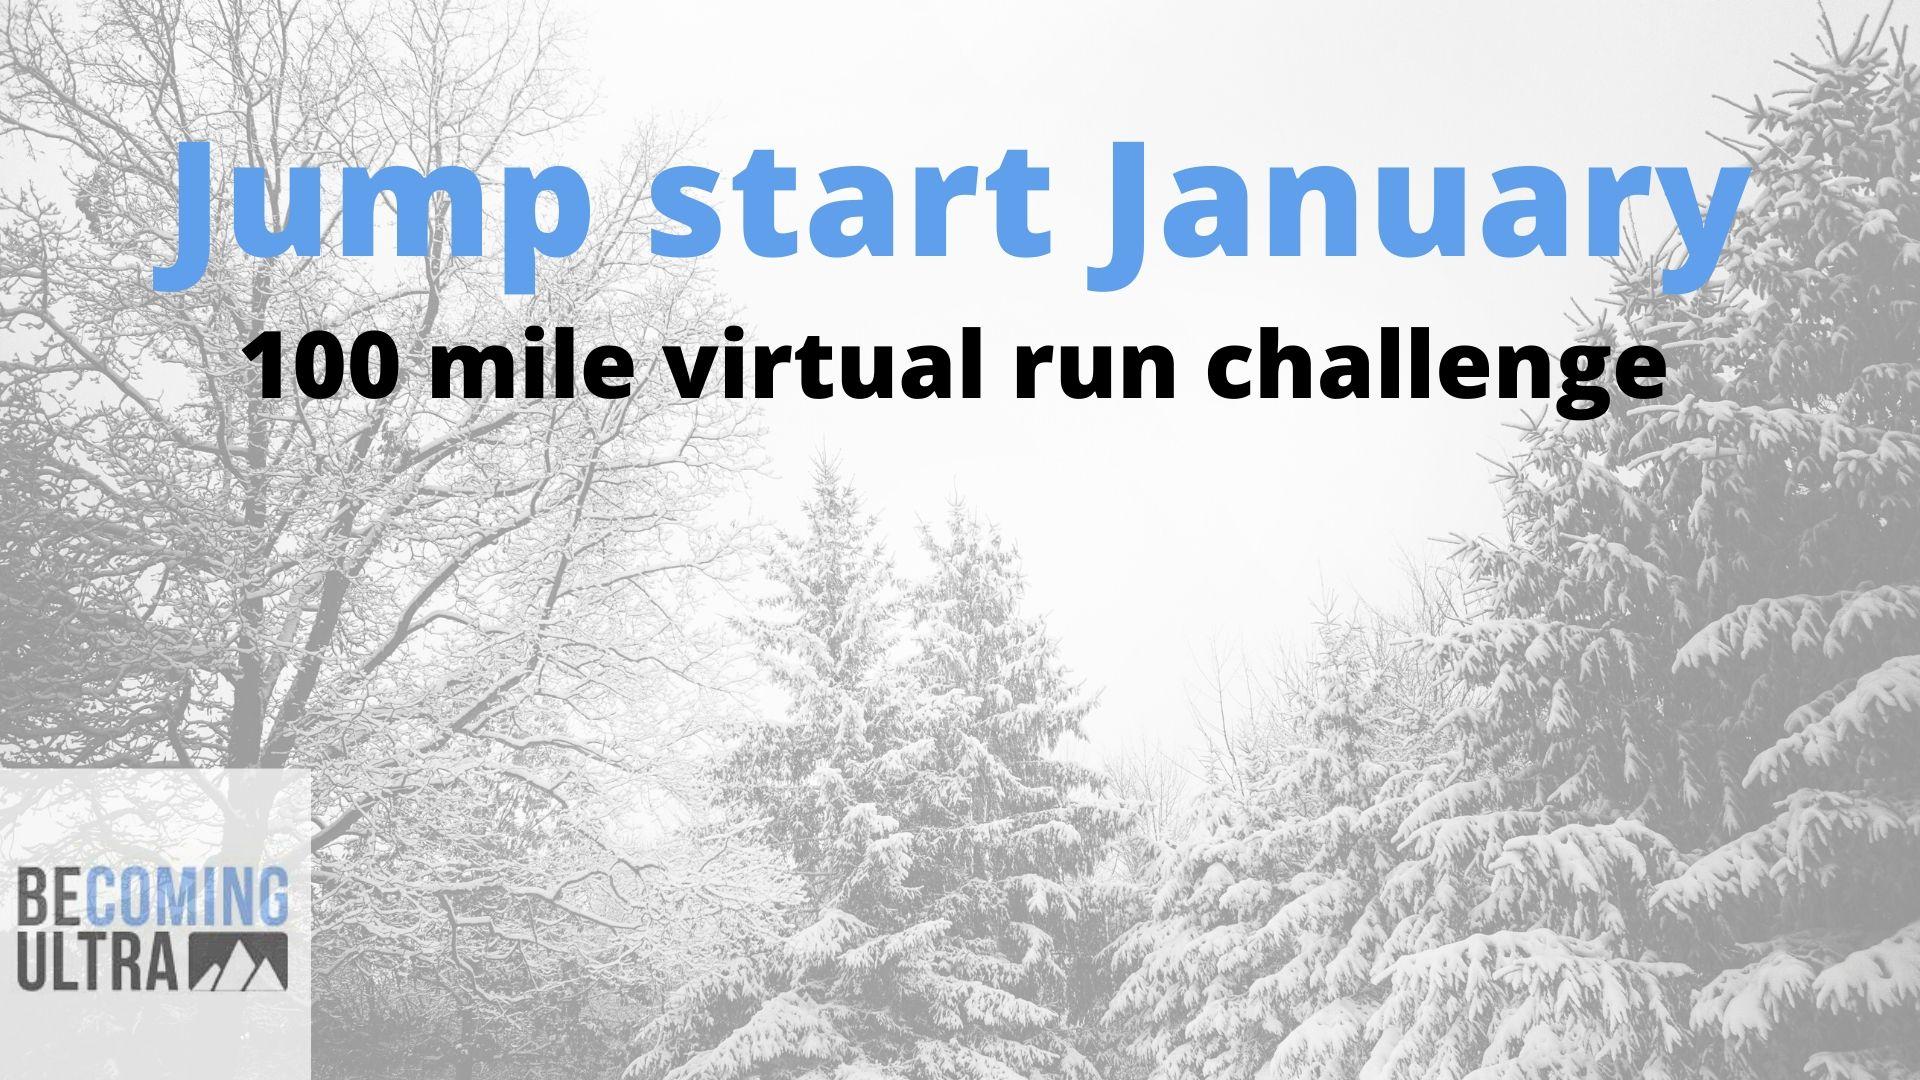 Jump start January 100 mile virtual run challenge